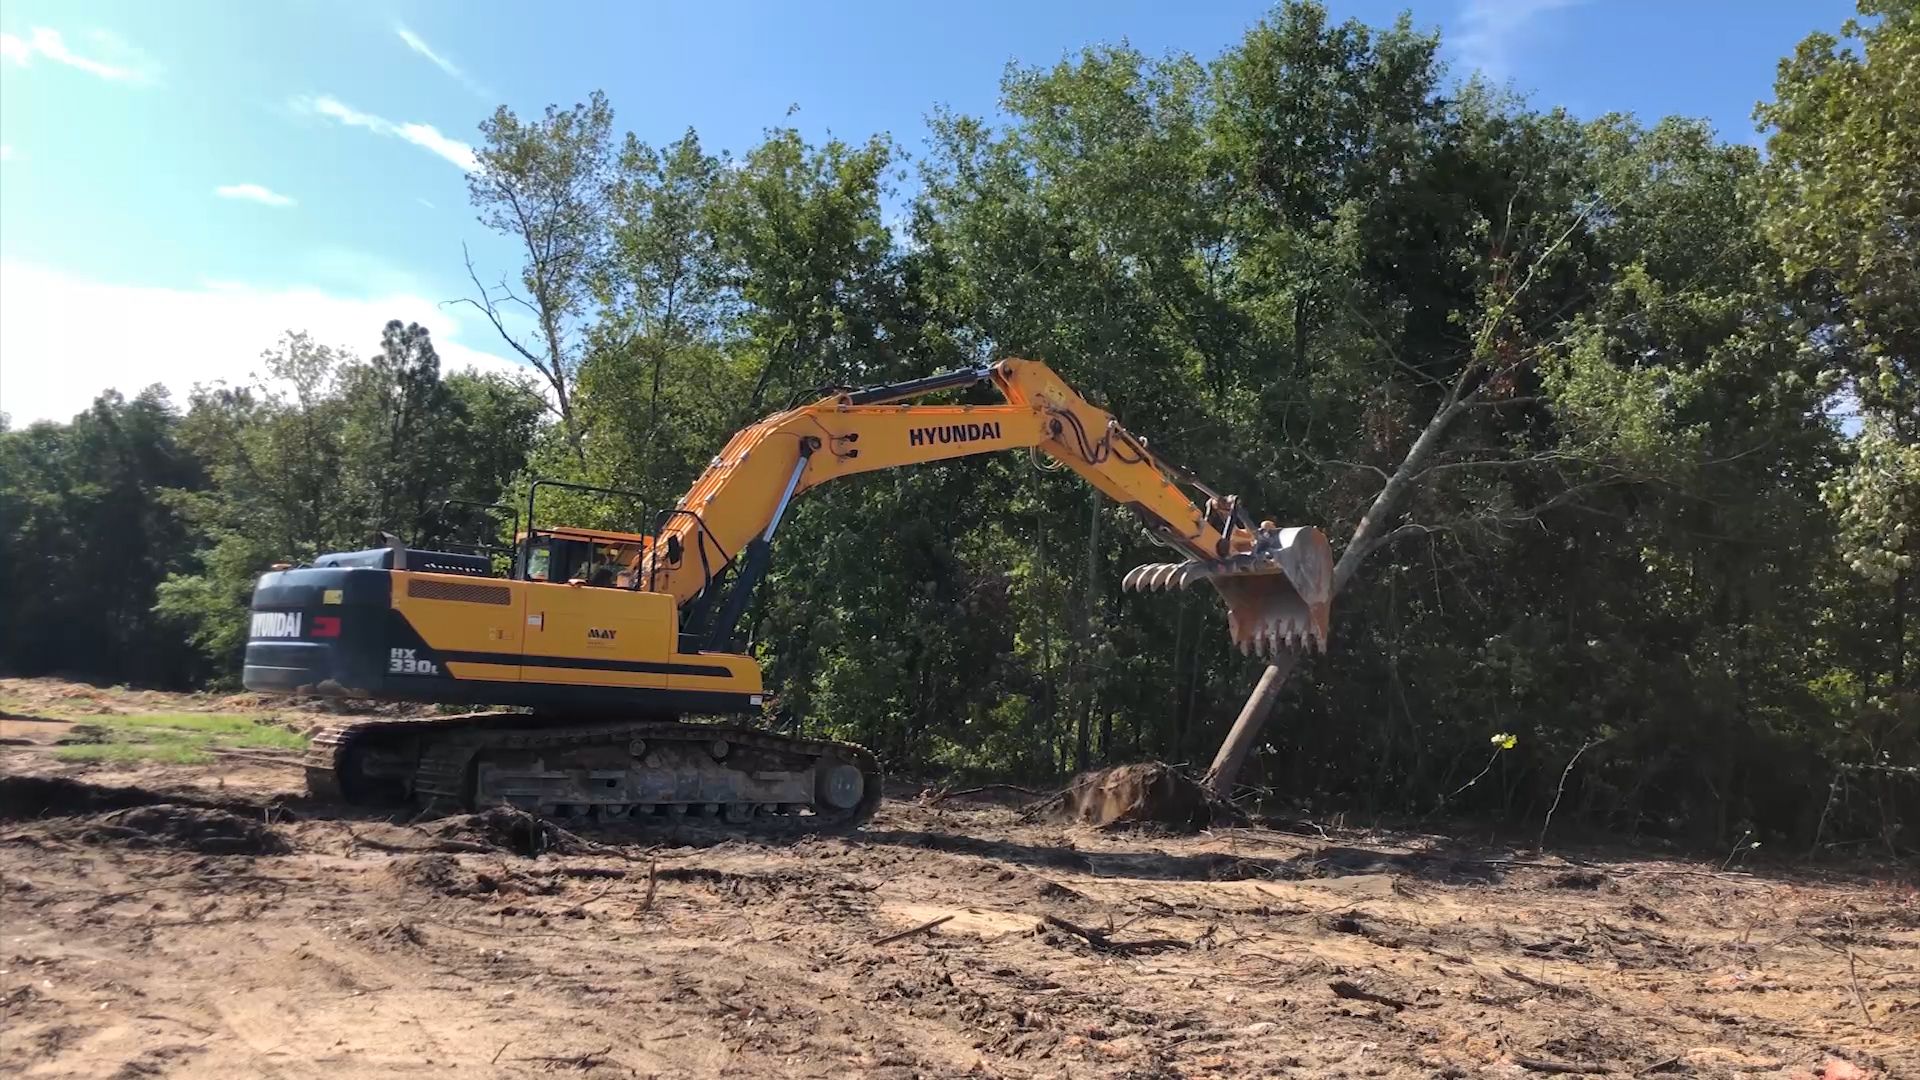 Atomic Sand HX330L Excavator Knocking Down Tree